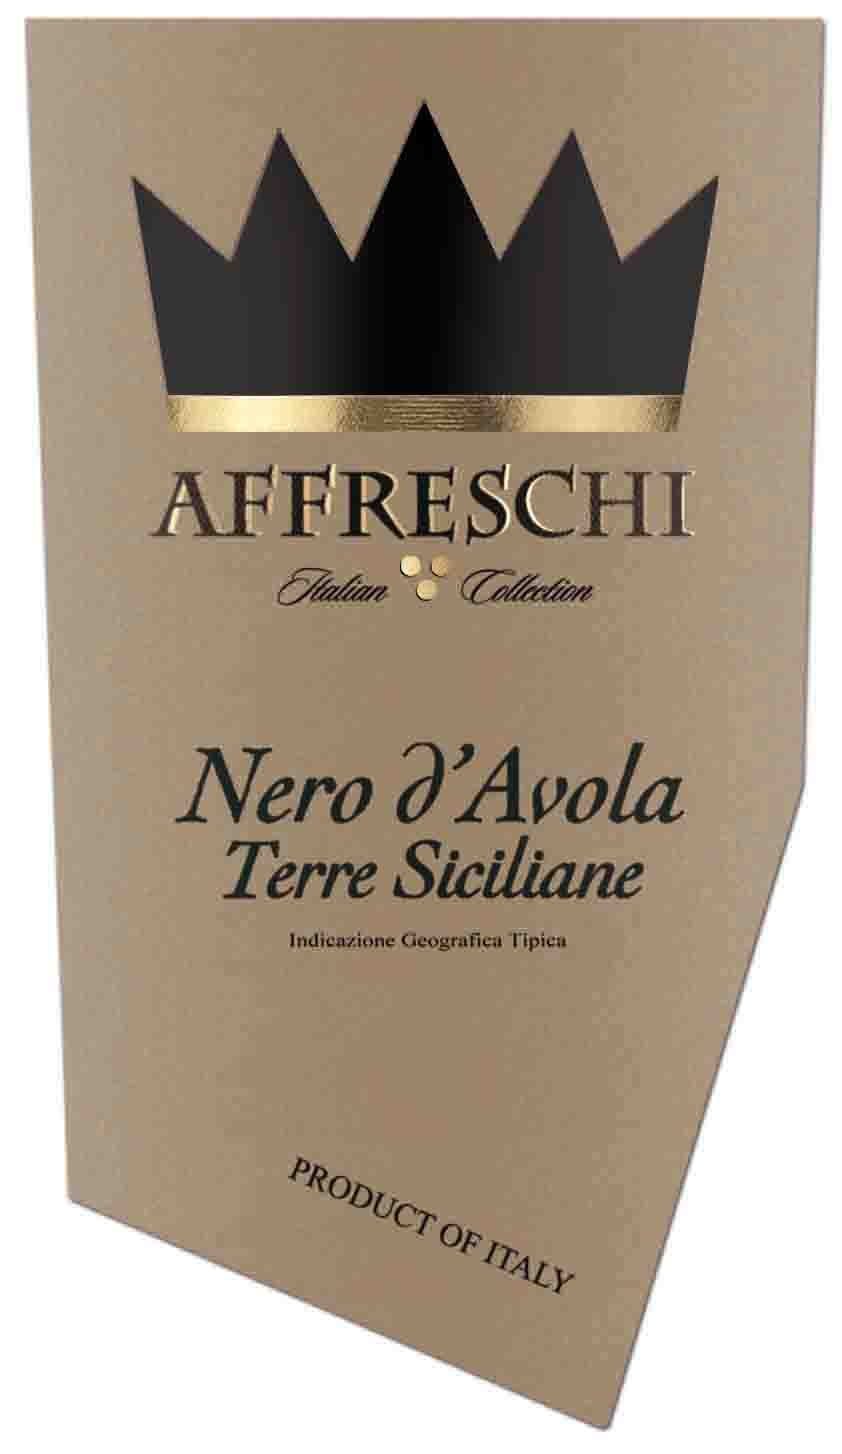 Affreschi - Nero D'Avola label